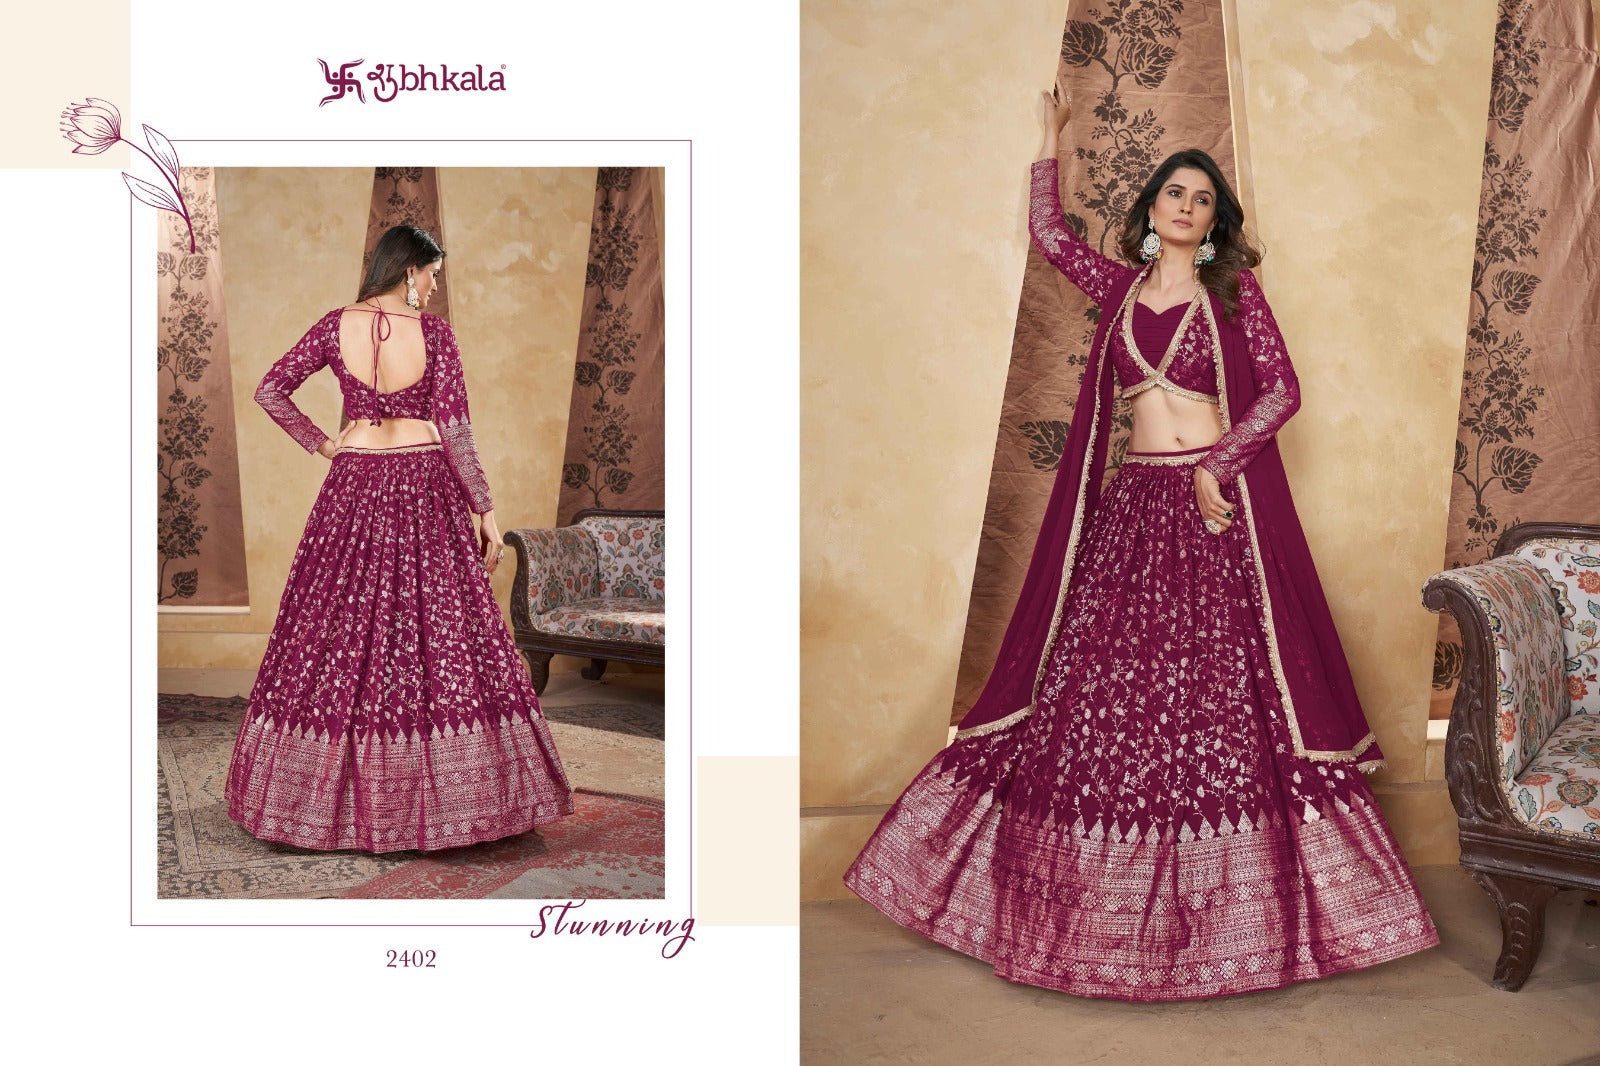 Girly Vol 29 Shubhkala Georgette Readymade Lehenga Choli Manufacturer India